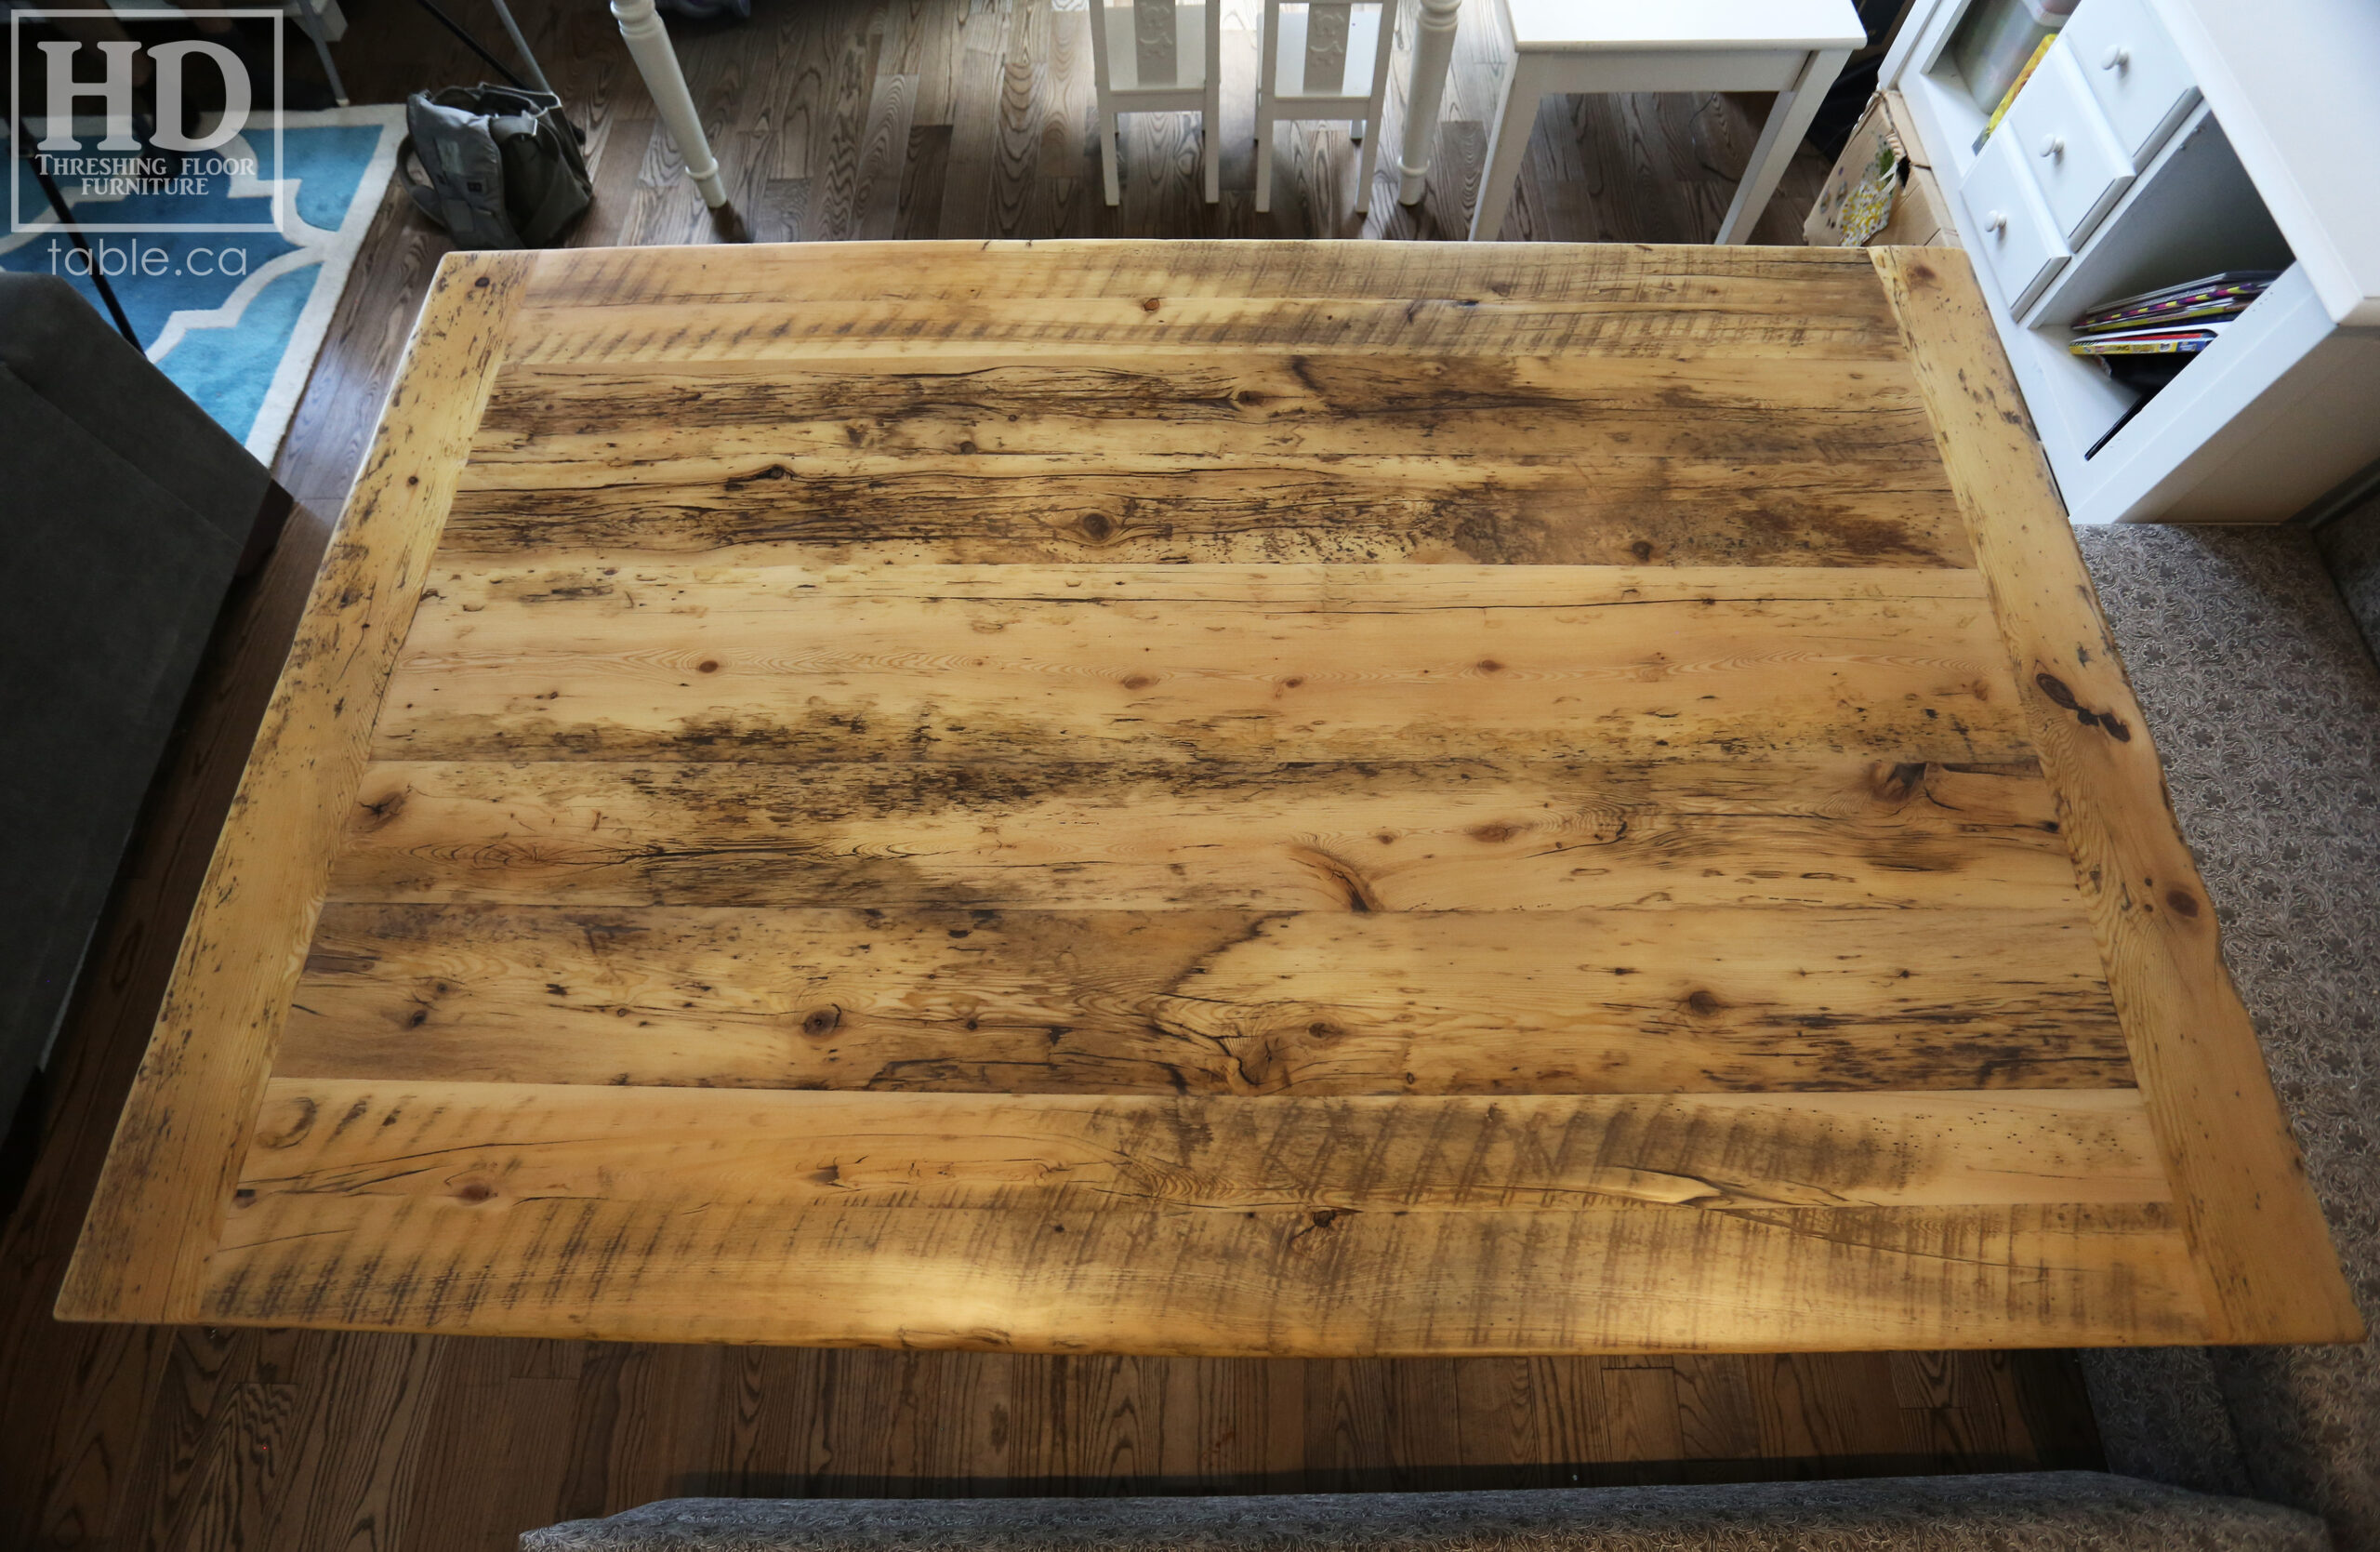 Custom Table Top made from Hemlock Threshing Floor Barn Floor Boards by HD Threshing Floor Furniture / www.table.ca